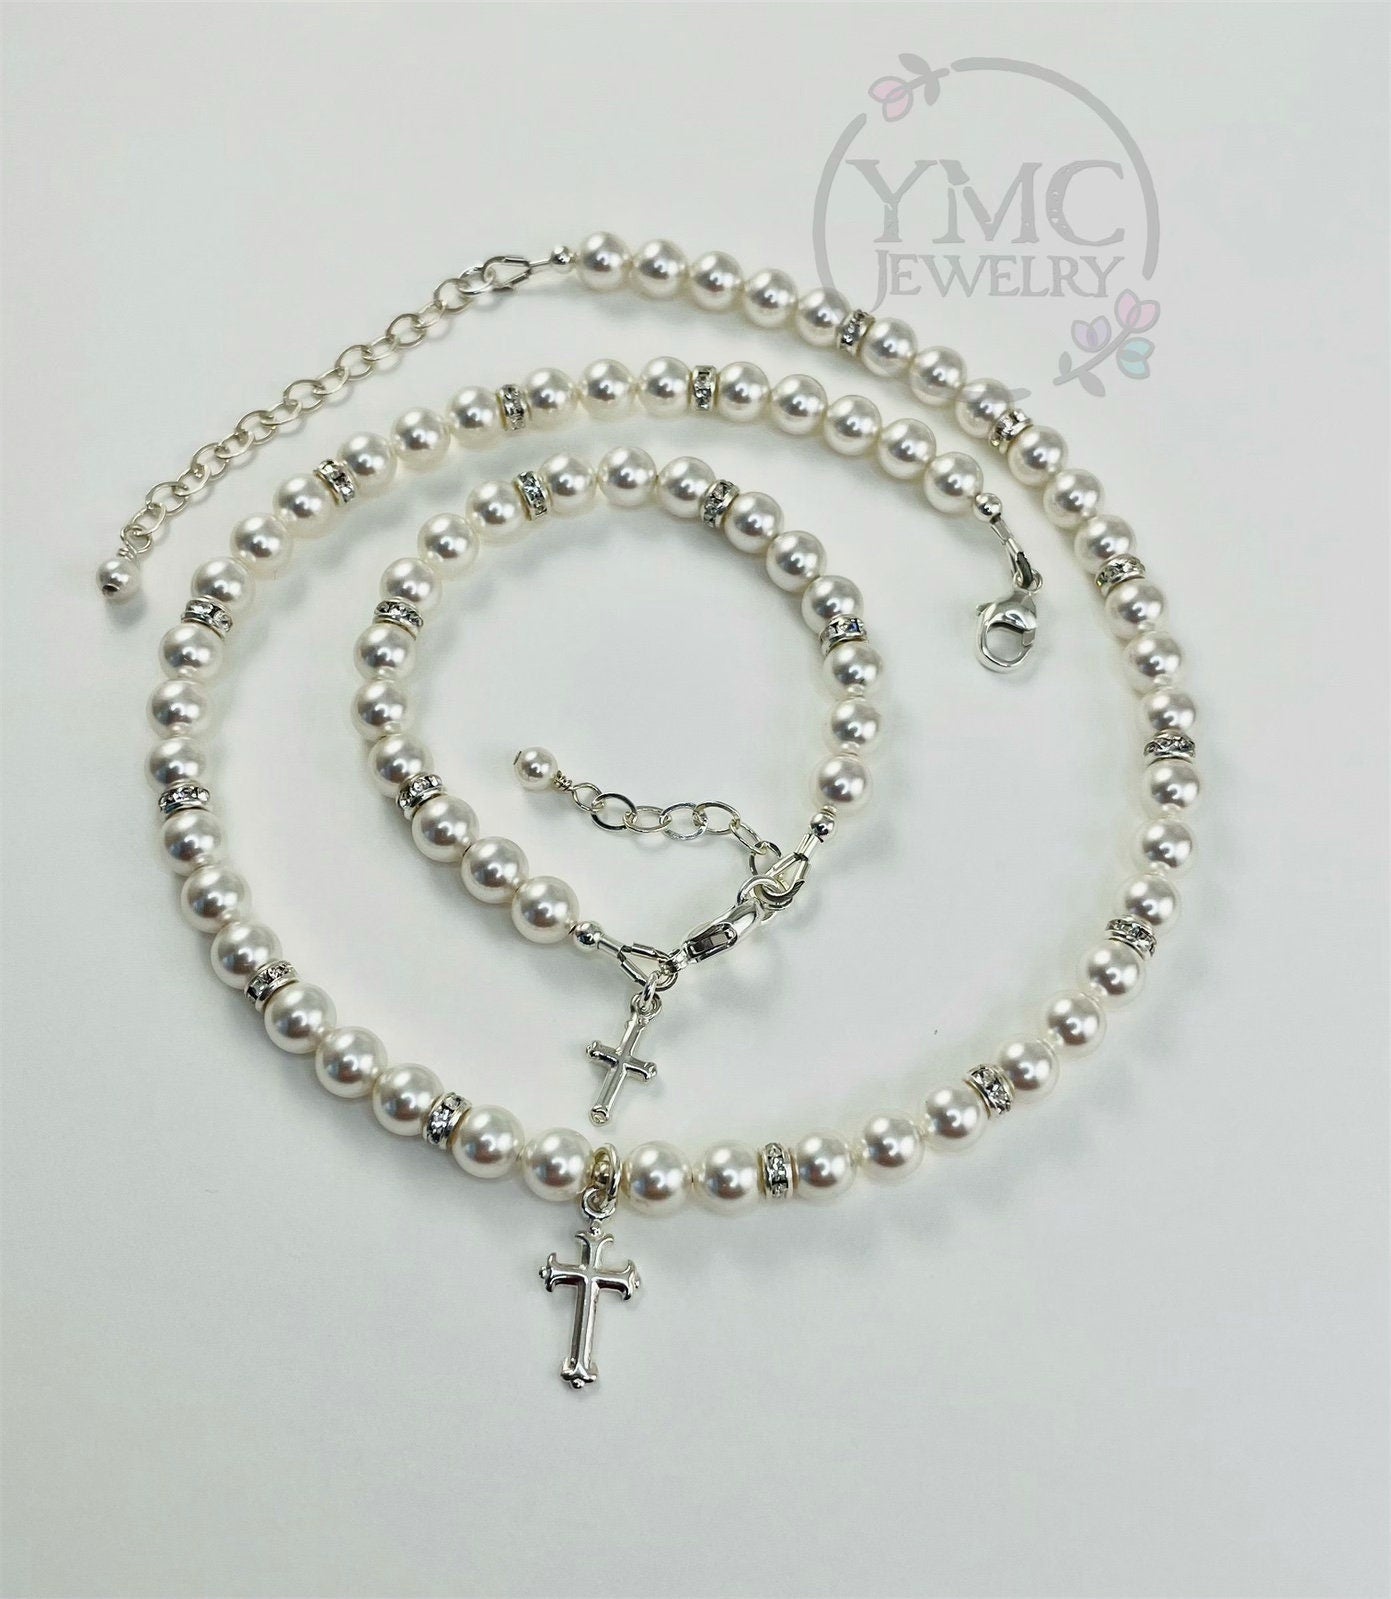 Pearl Cross Necklace Bracelet Earrings SET, First Communion Pearl Jewelry Set,Confirmation Jewelry Set,Baptism Pearl Jewelry Set,Pearl Set